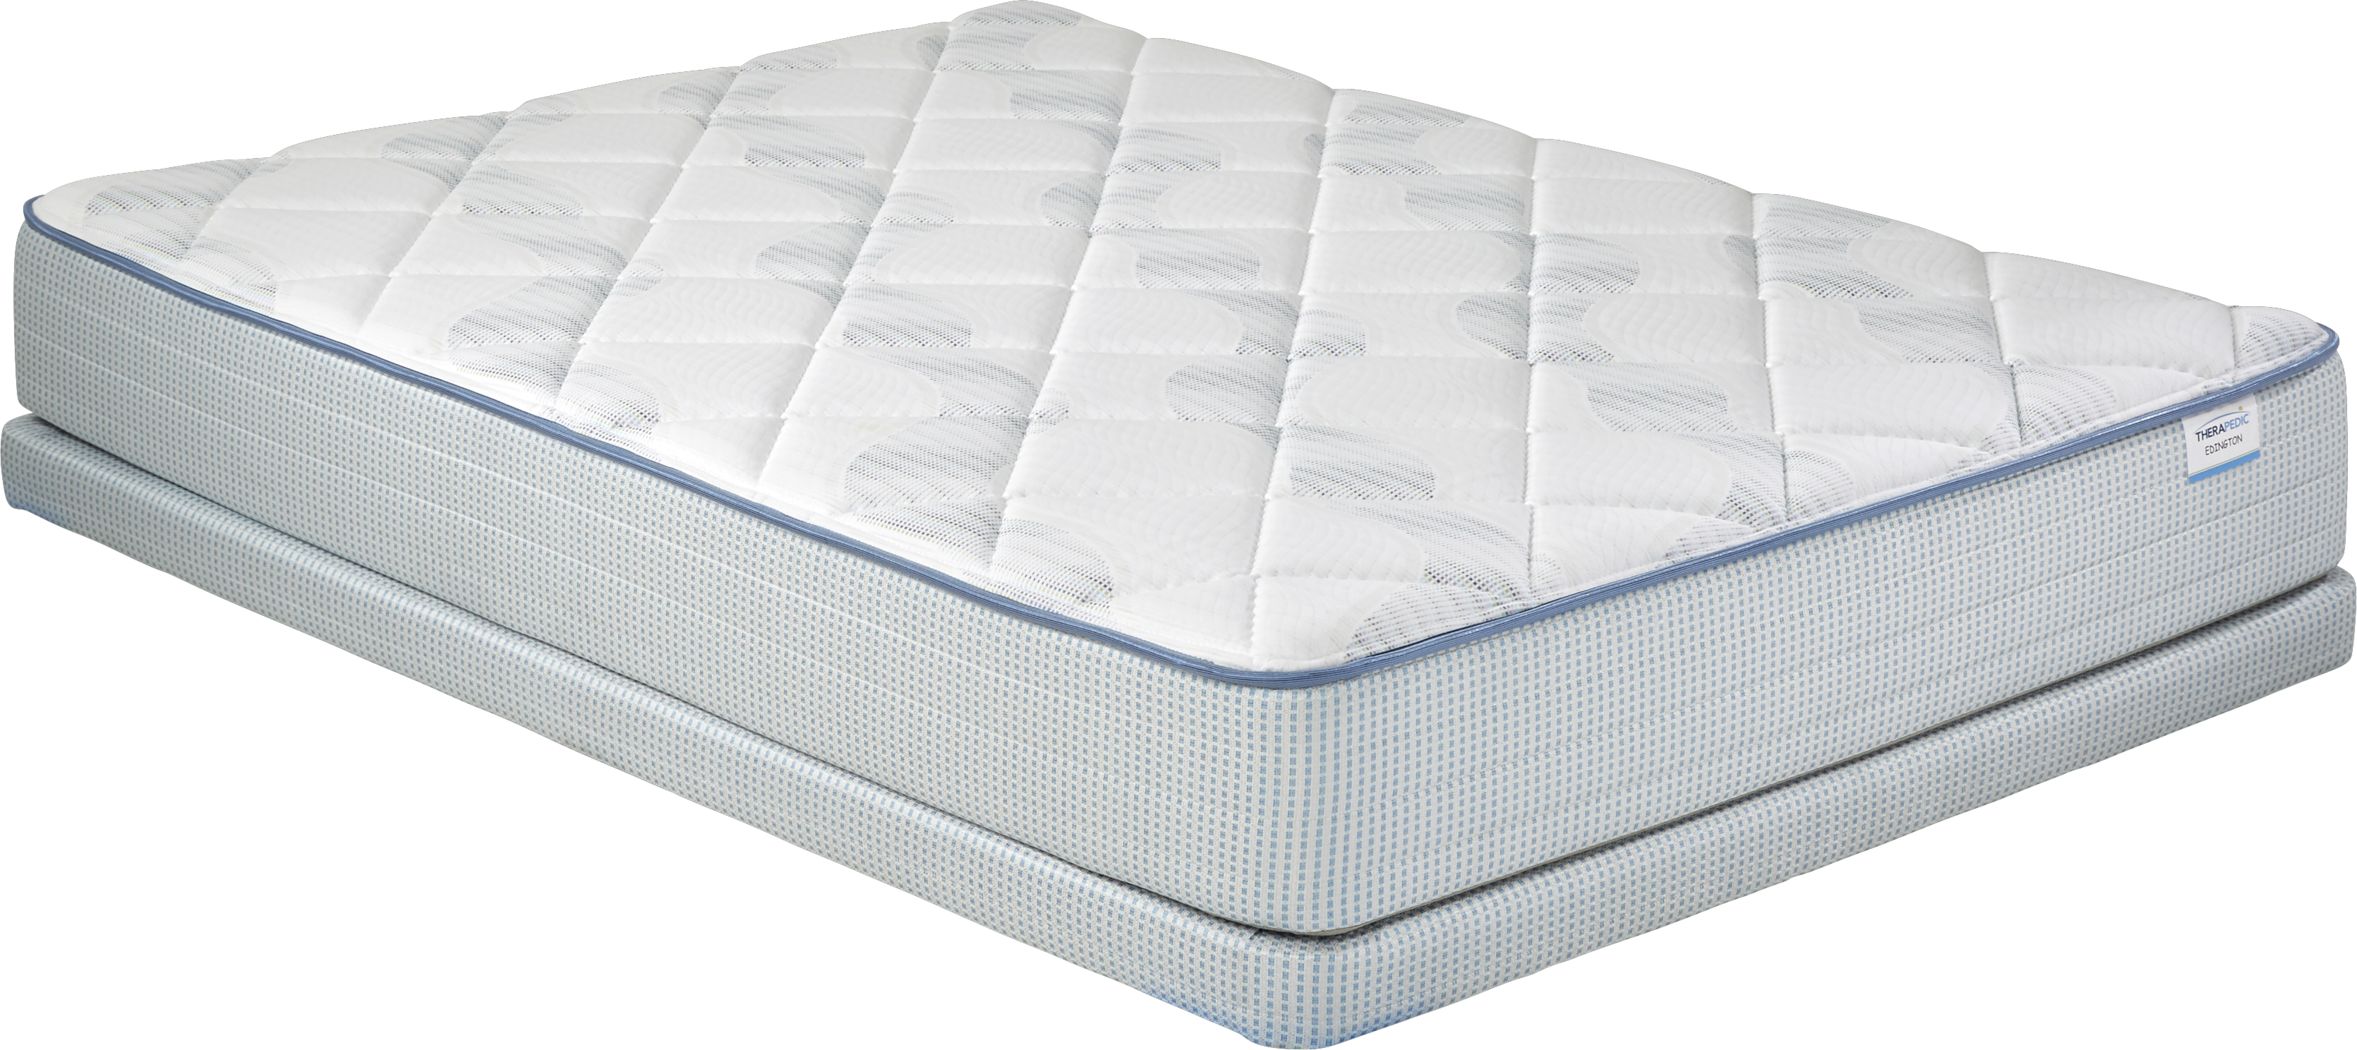 low profile mattress in a box